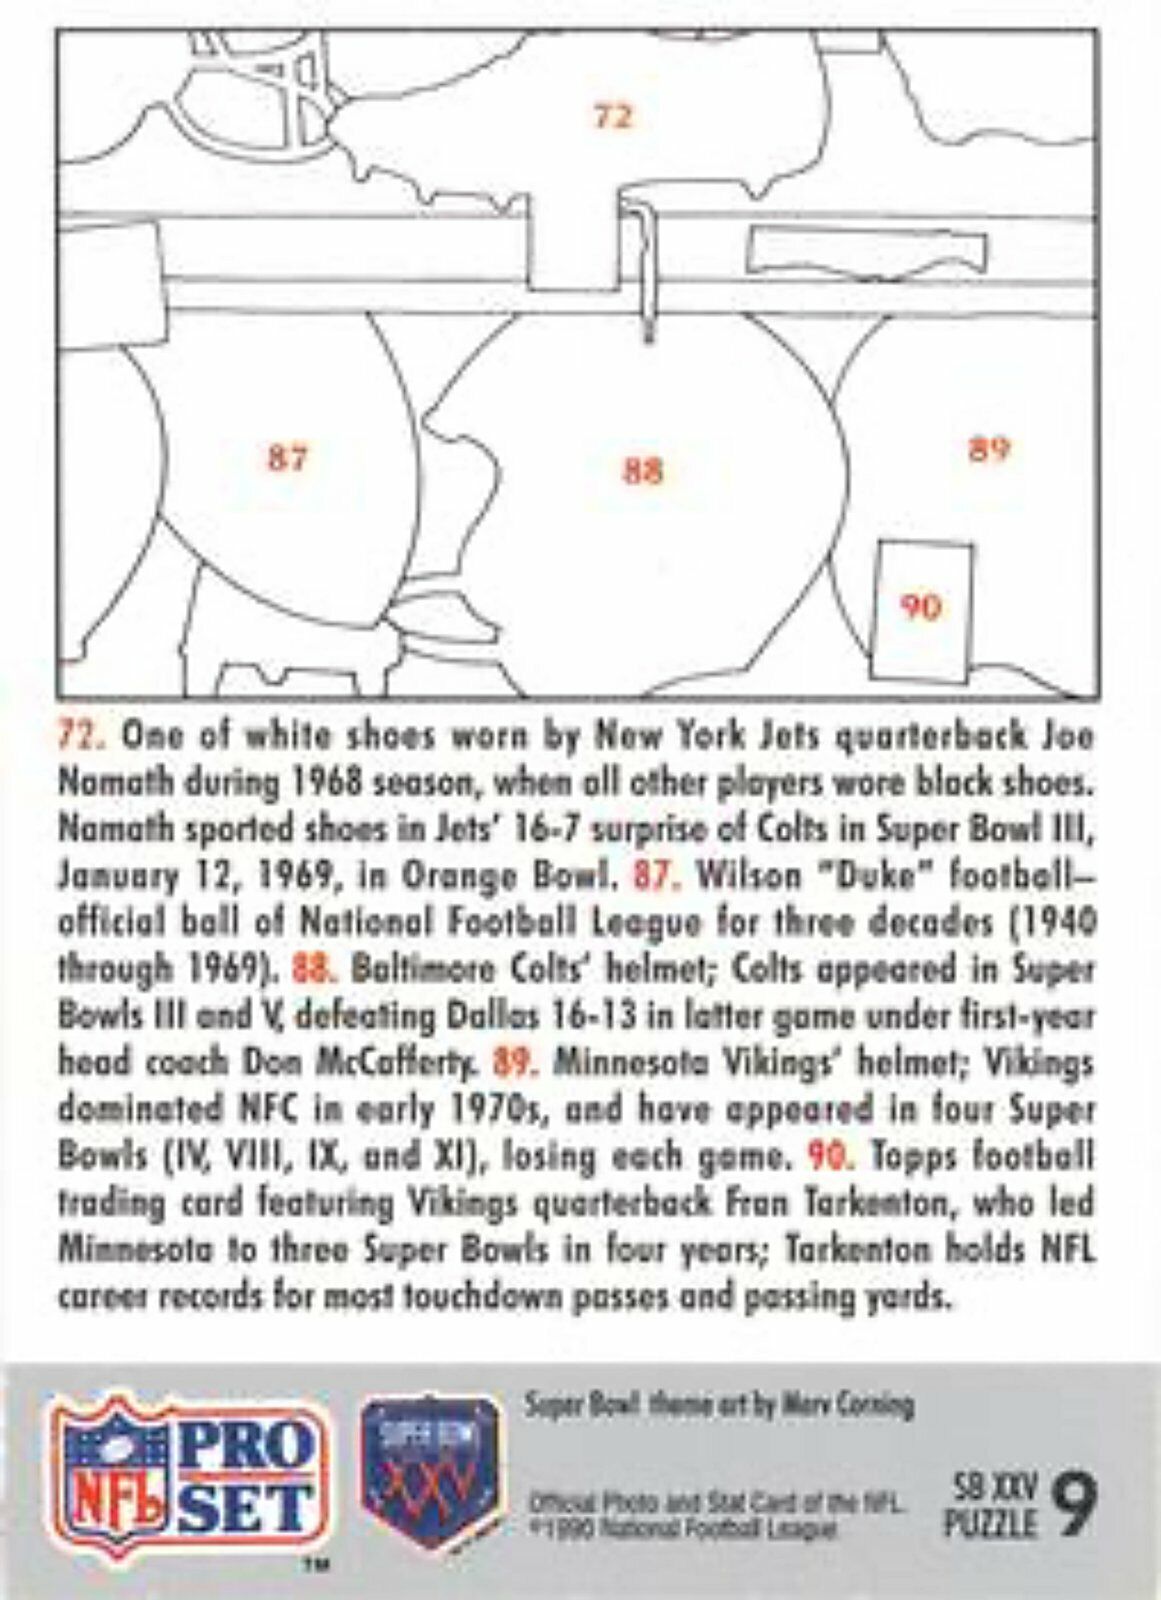 1990-91 Pro Set Super Bowl 160 Football 9 Puzzle 9